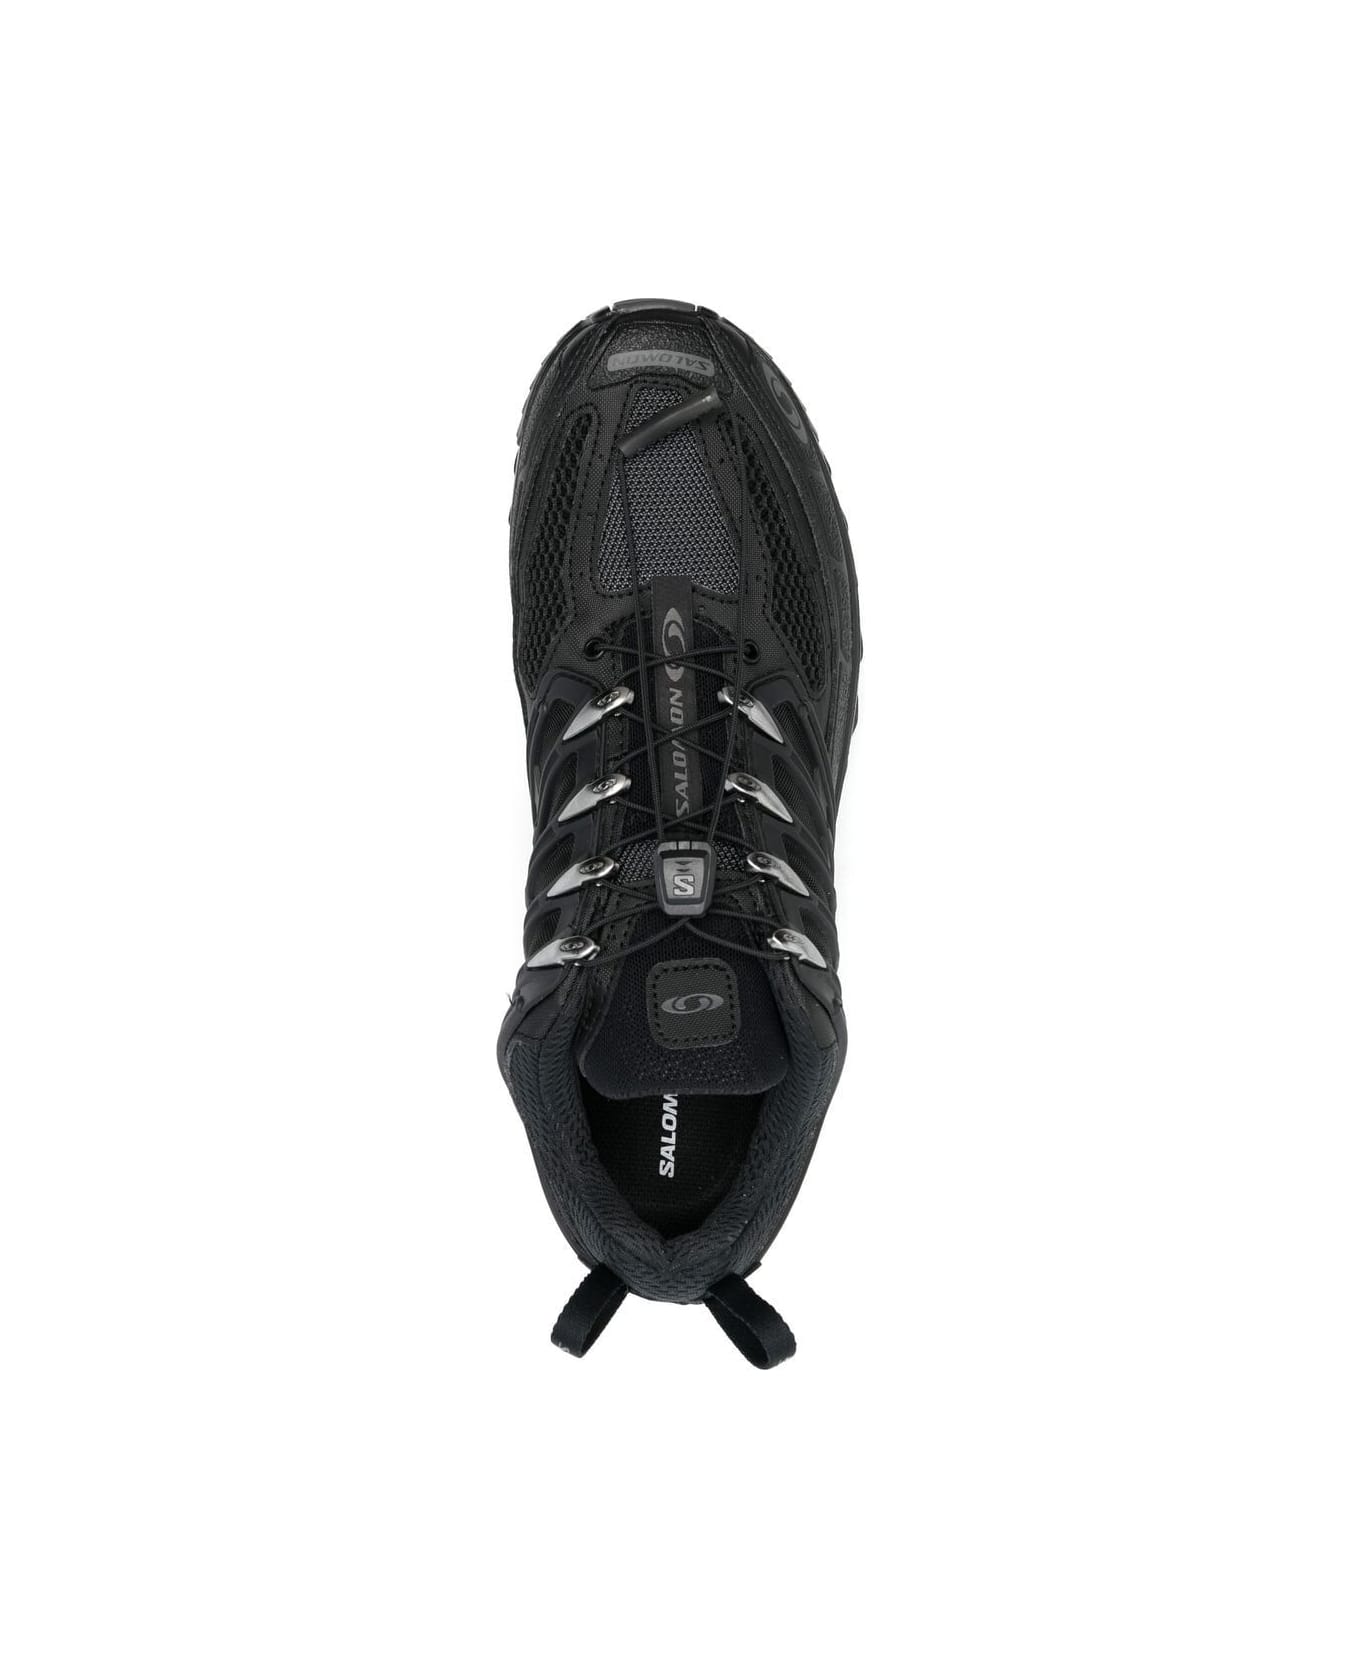 Salomon Acs Pro Sneakers - Black Black Black スニーカー